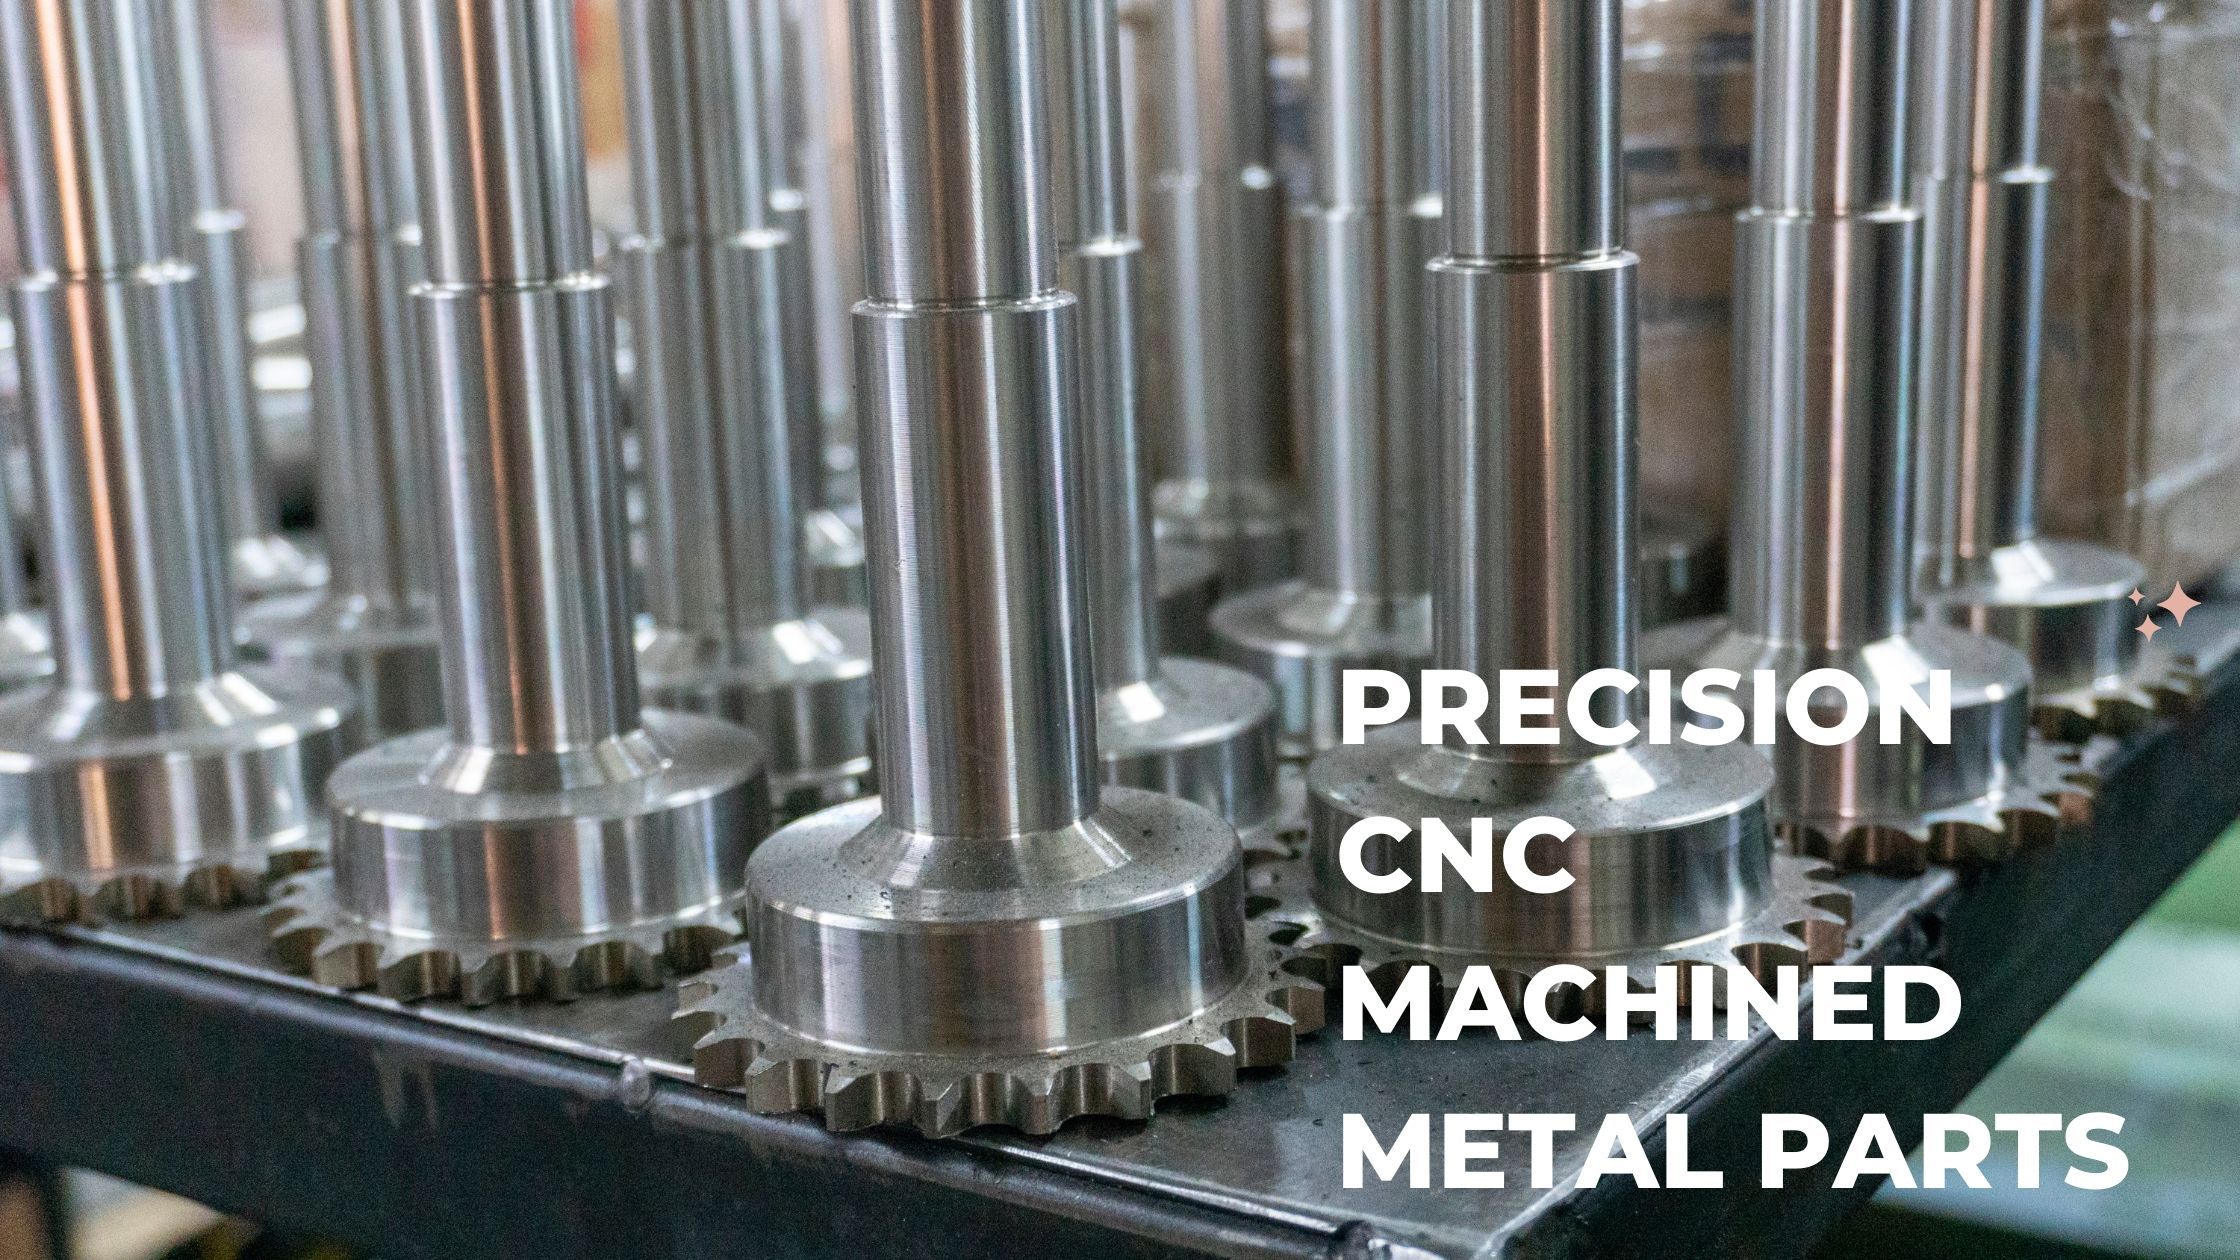 Precision CNC Machined Metal Parts